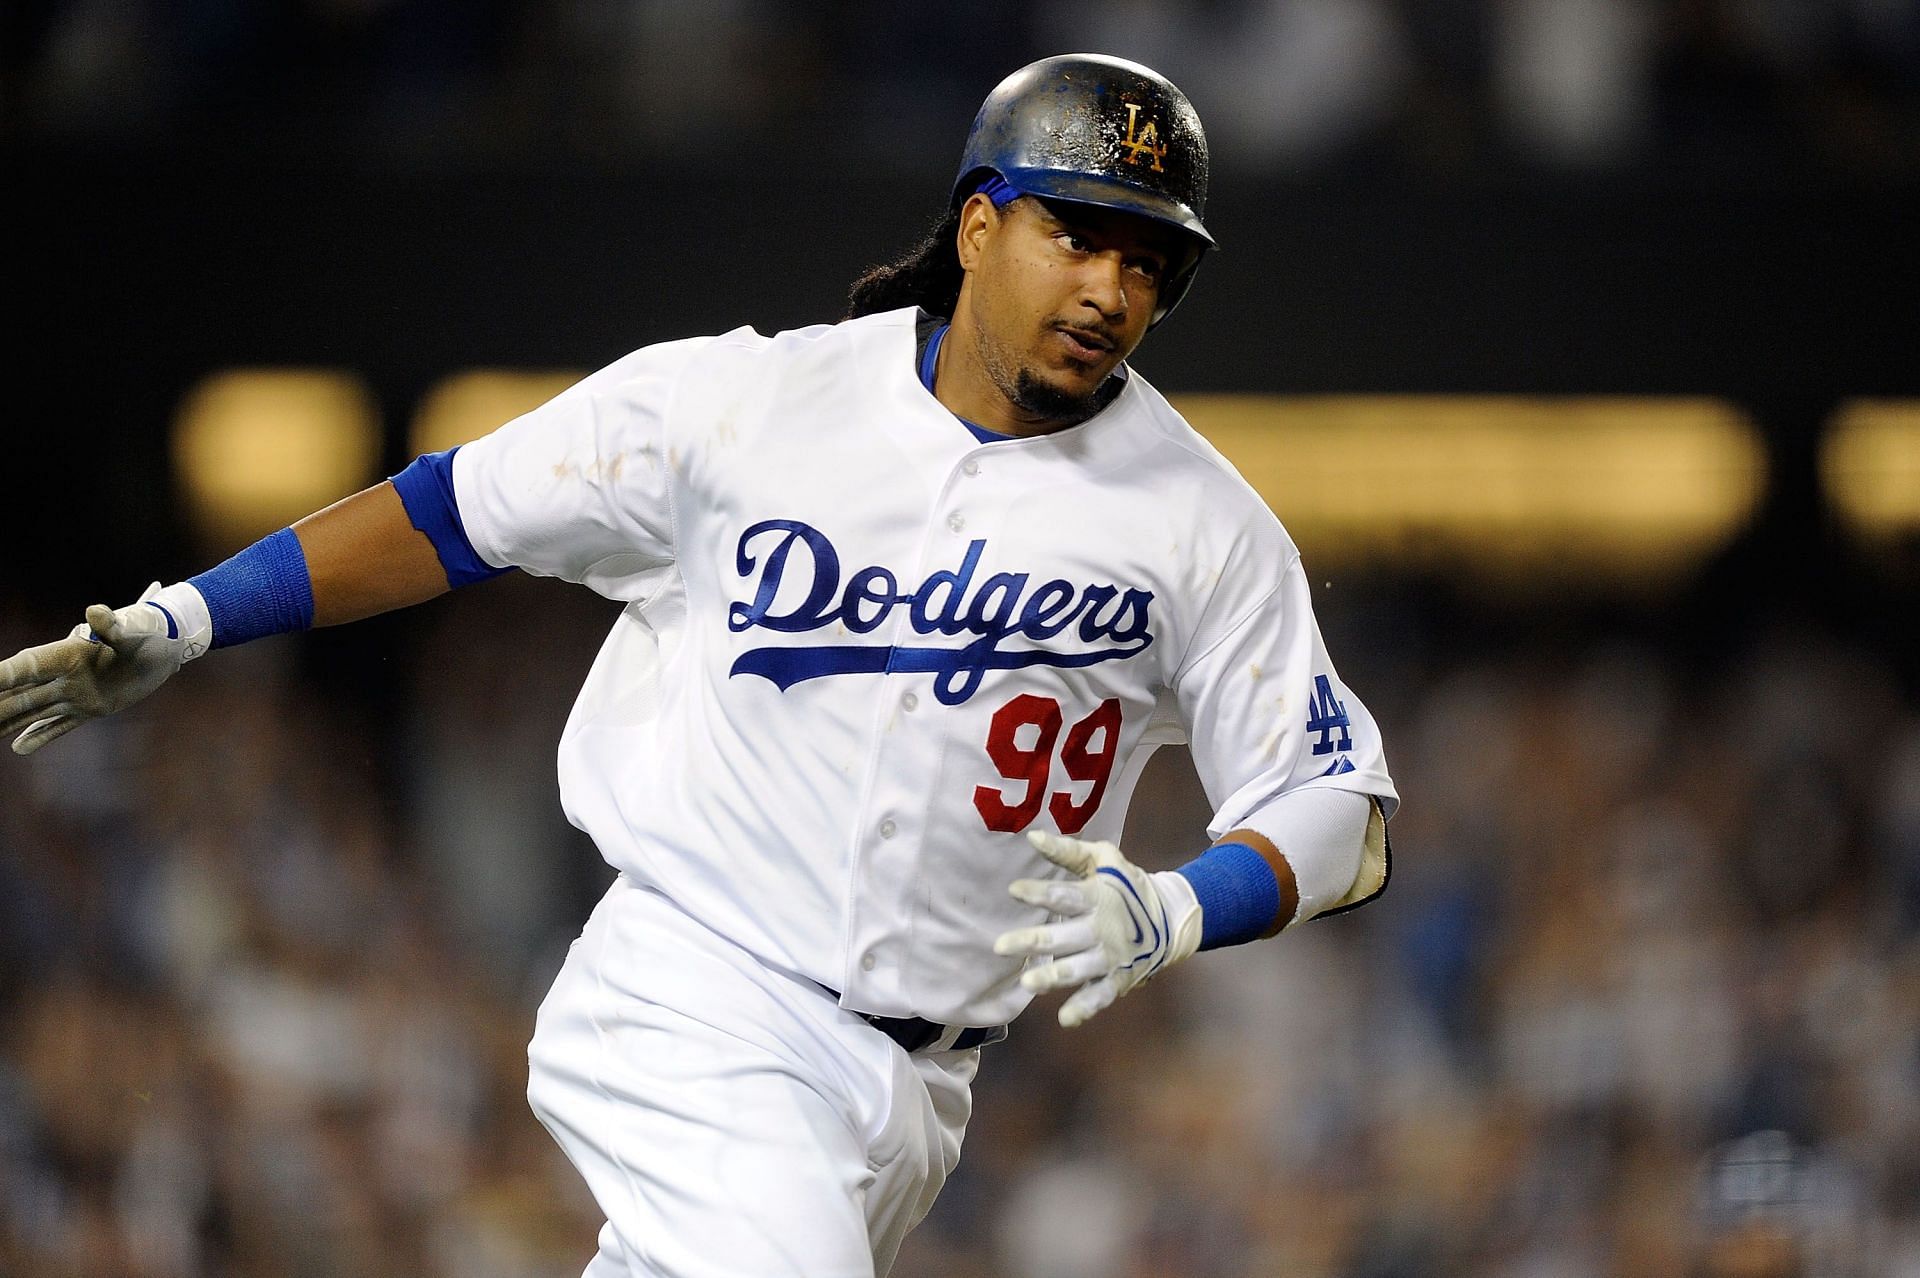 Manny Ramirez not ready to retire from baseball - Sports Illustrated